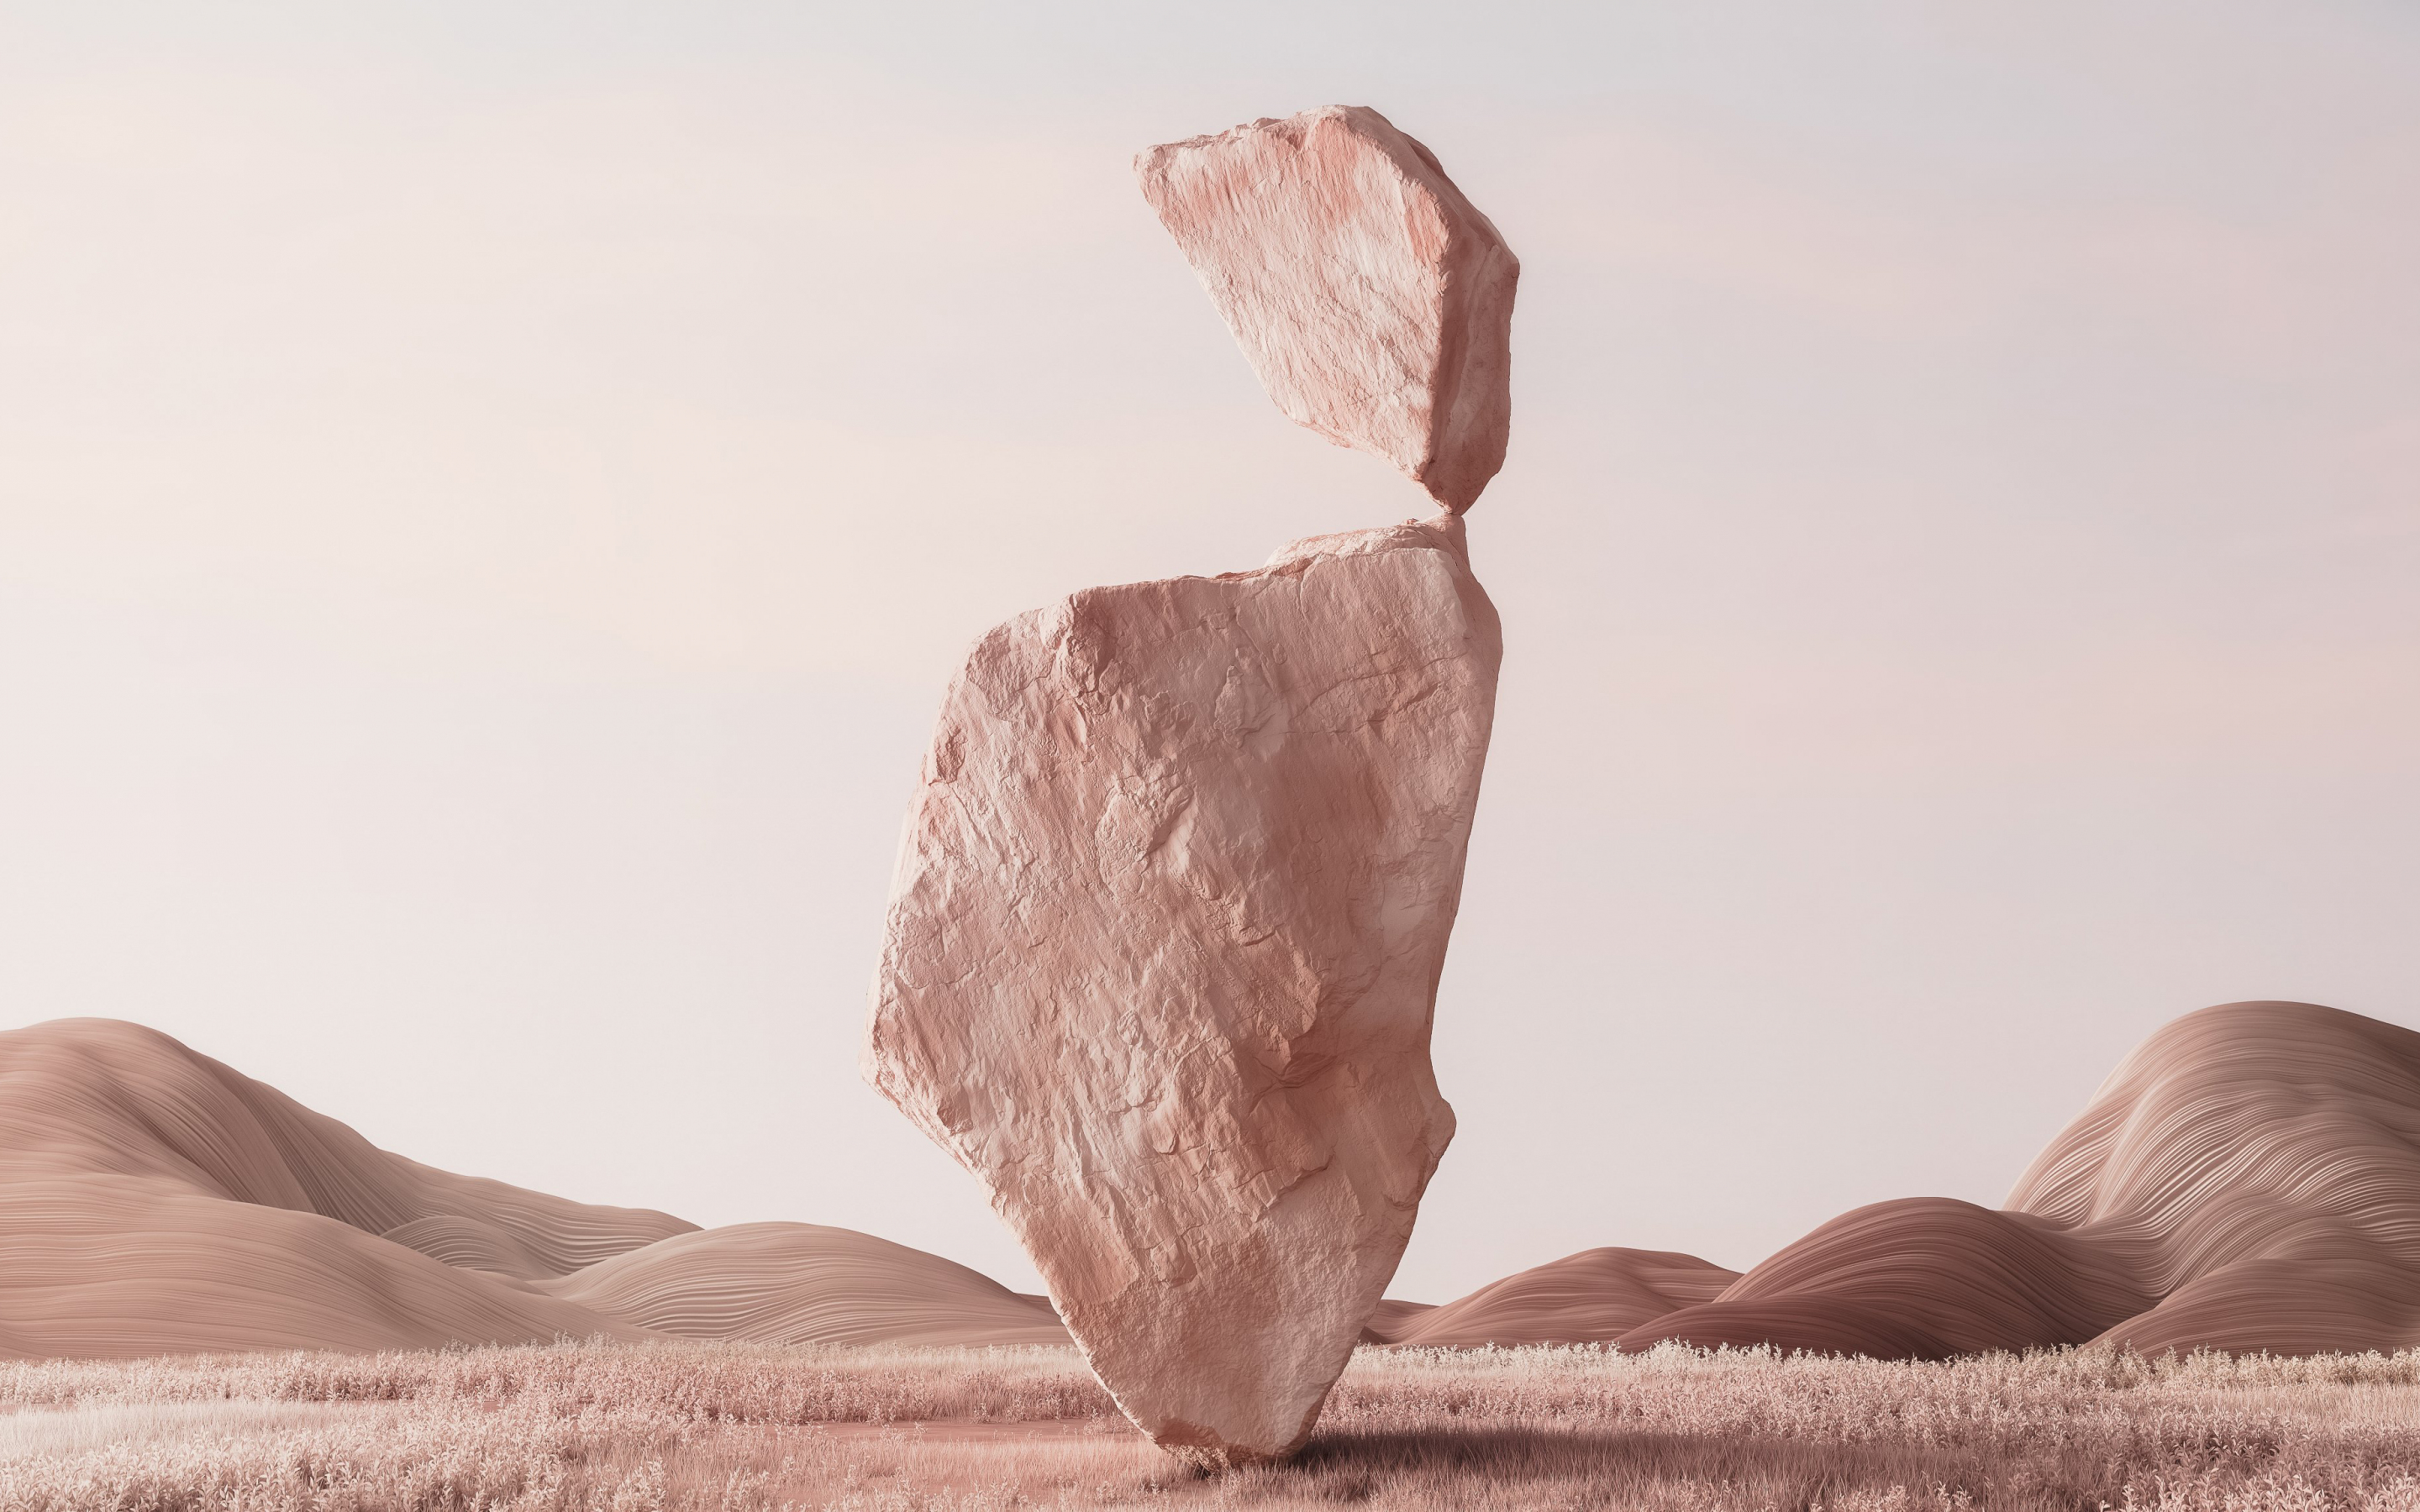 Rocks, balance, stock photography, 2880x1800 wallpaper